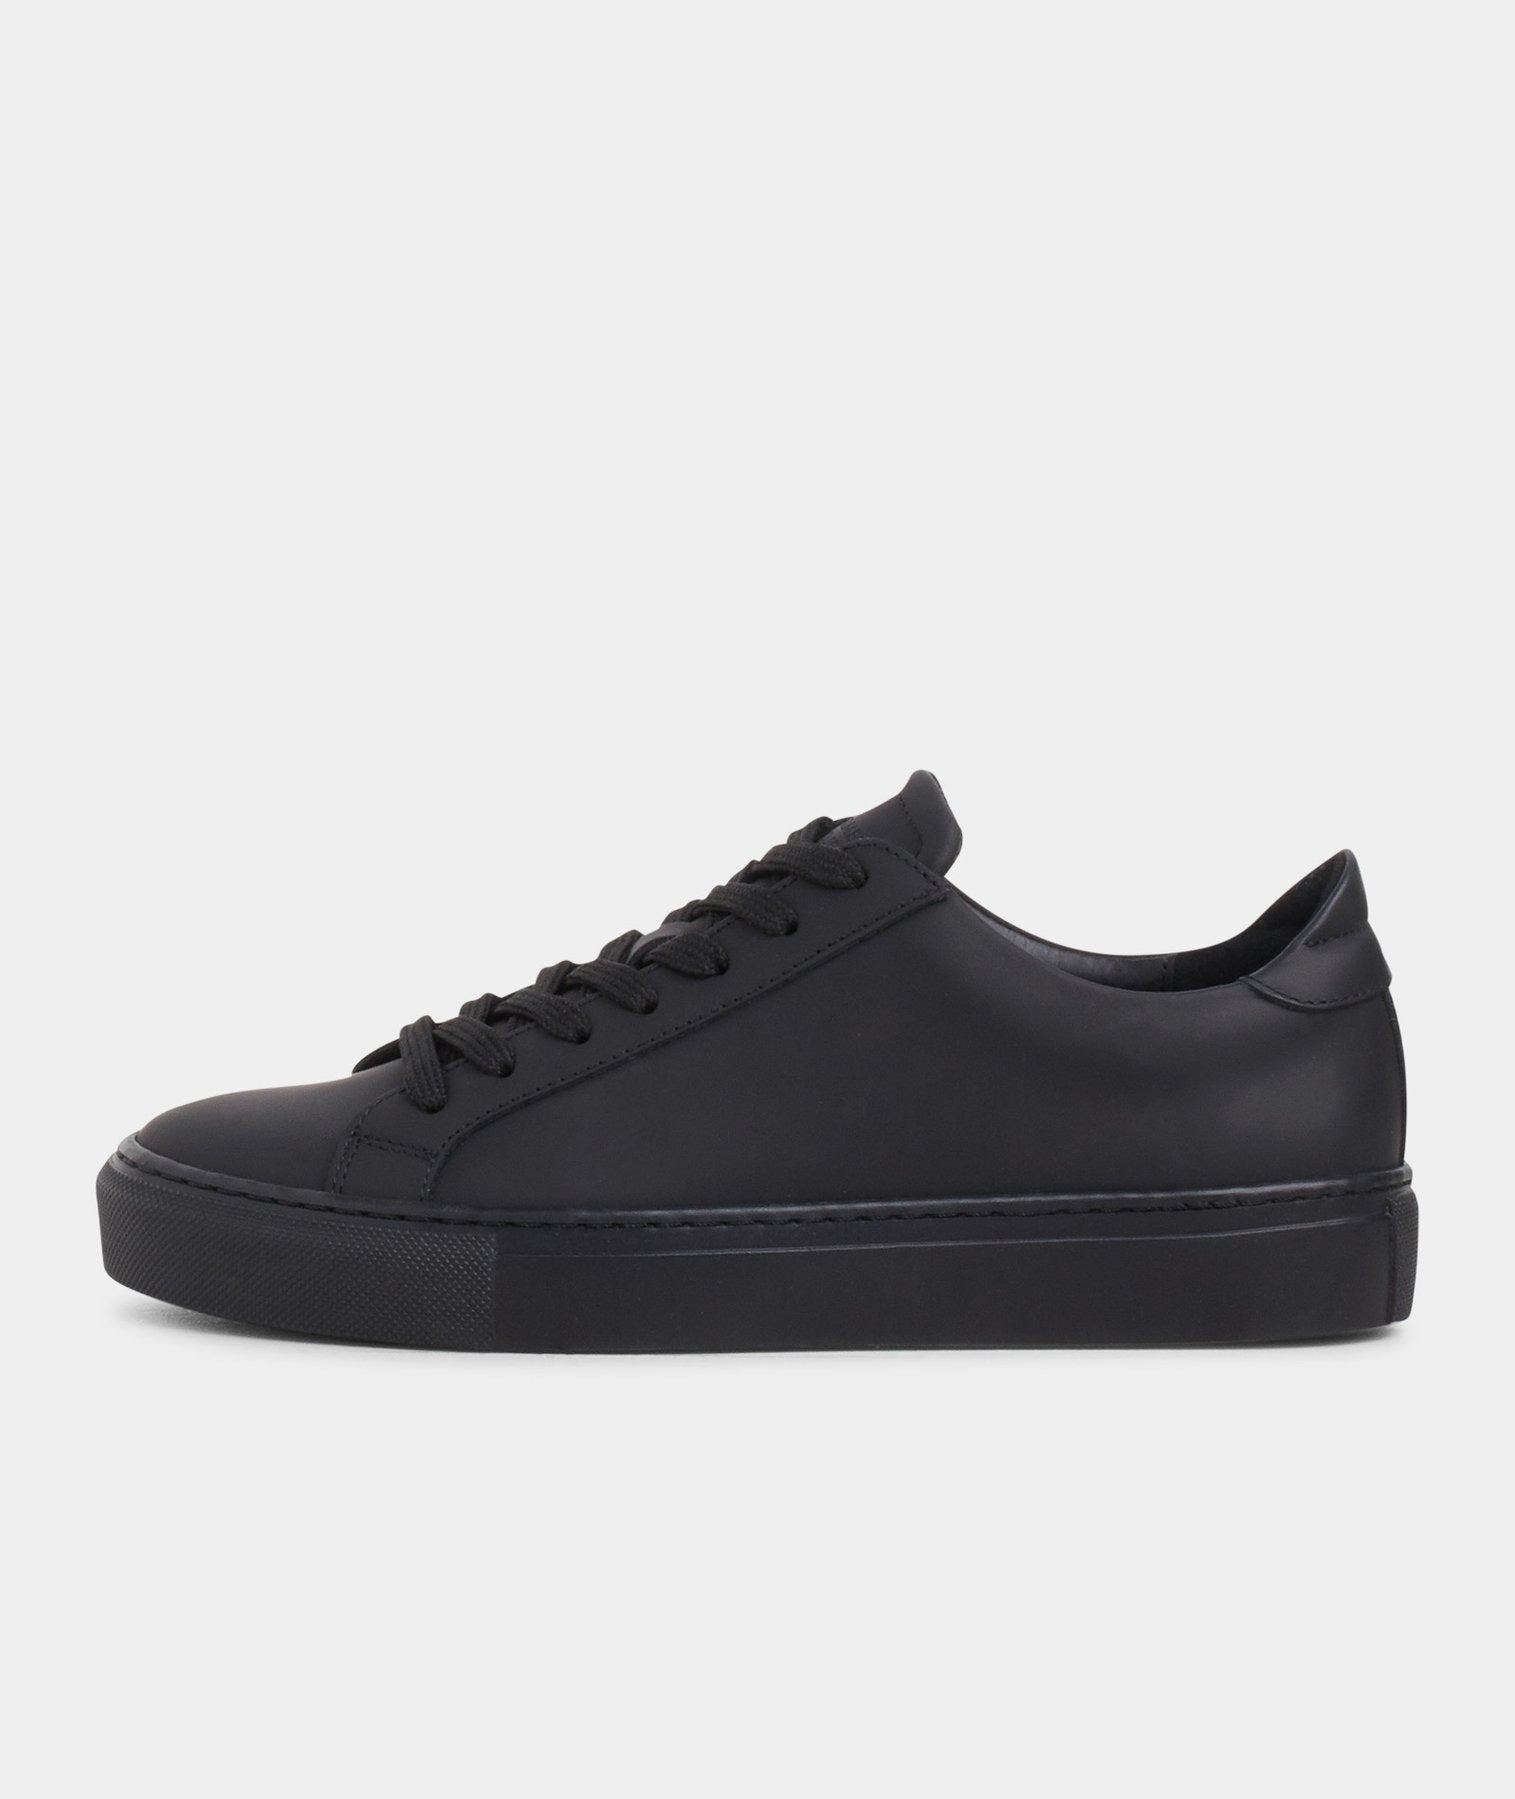 Type Sneaker, black rubberised leather